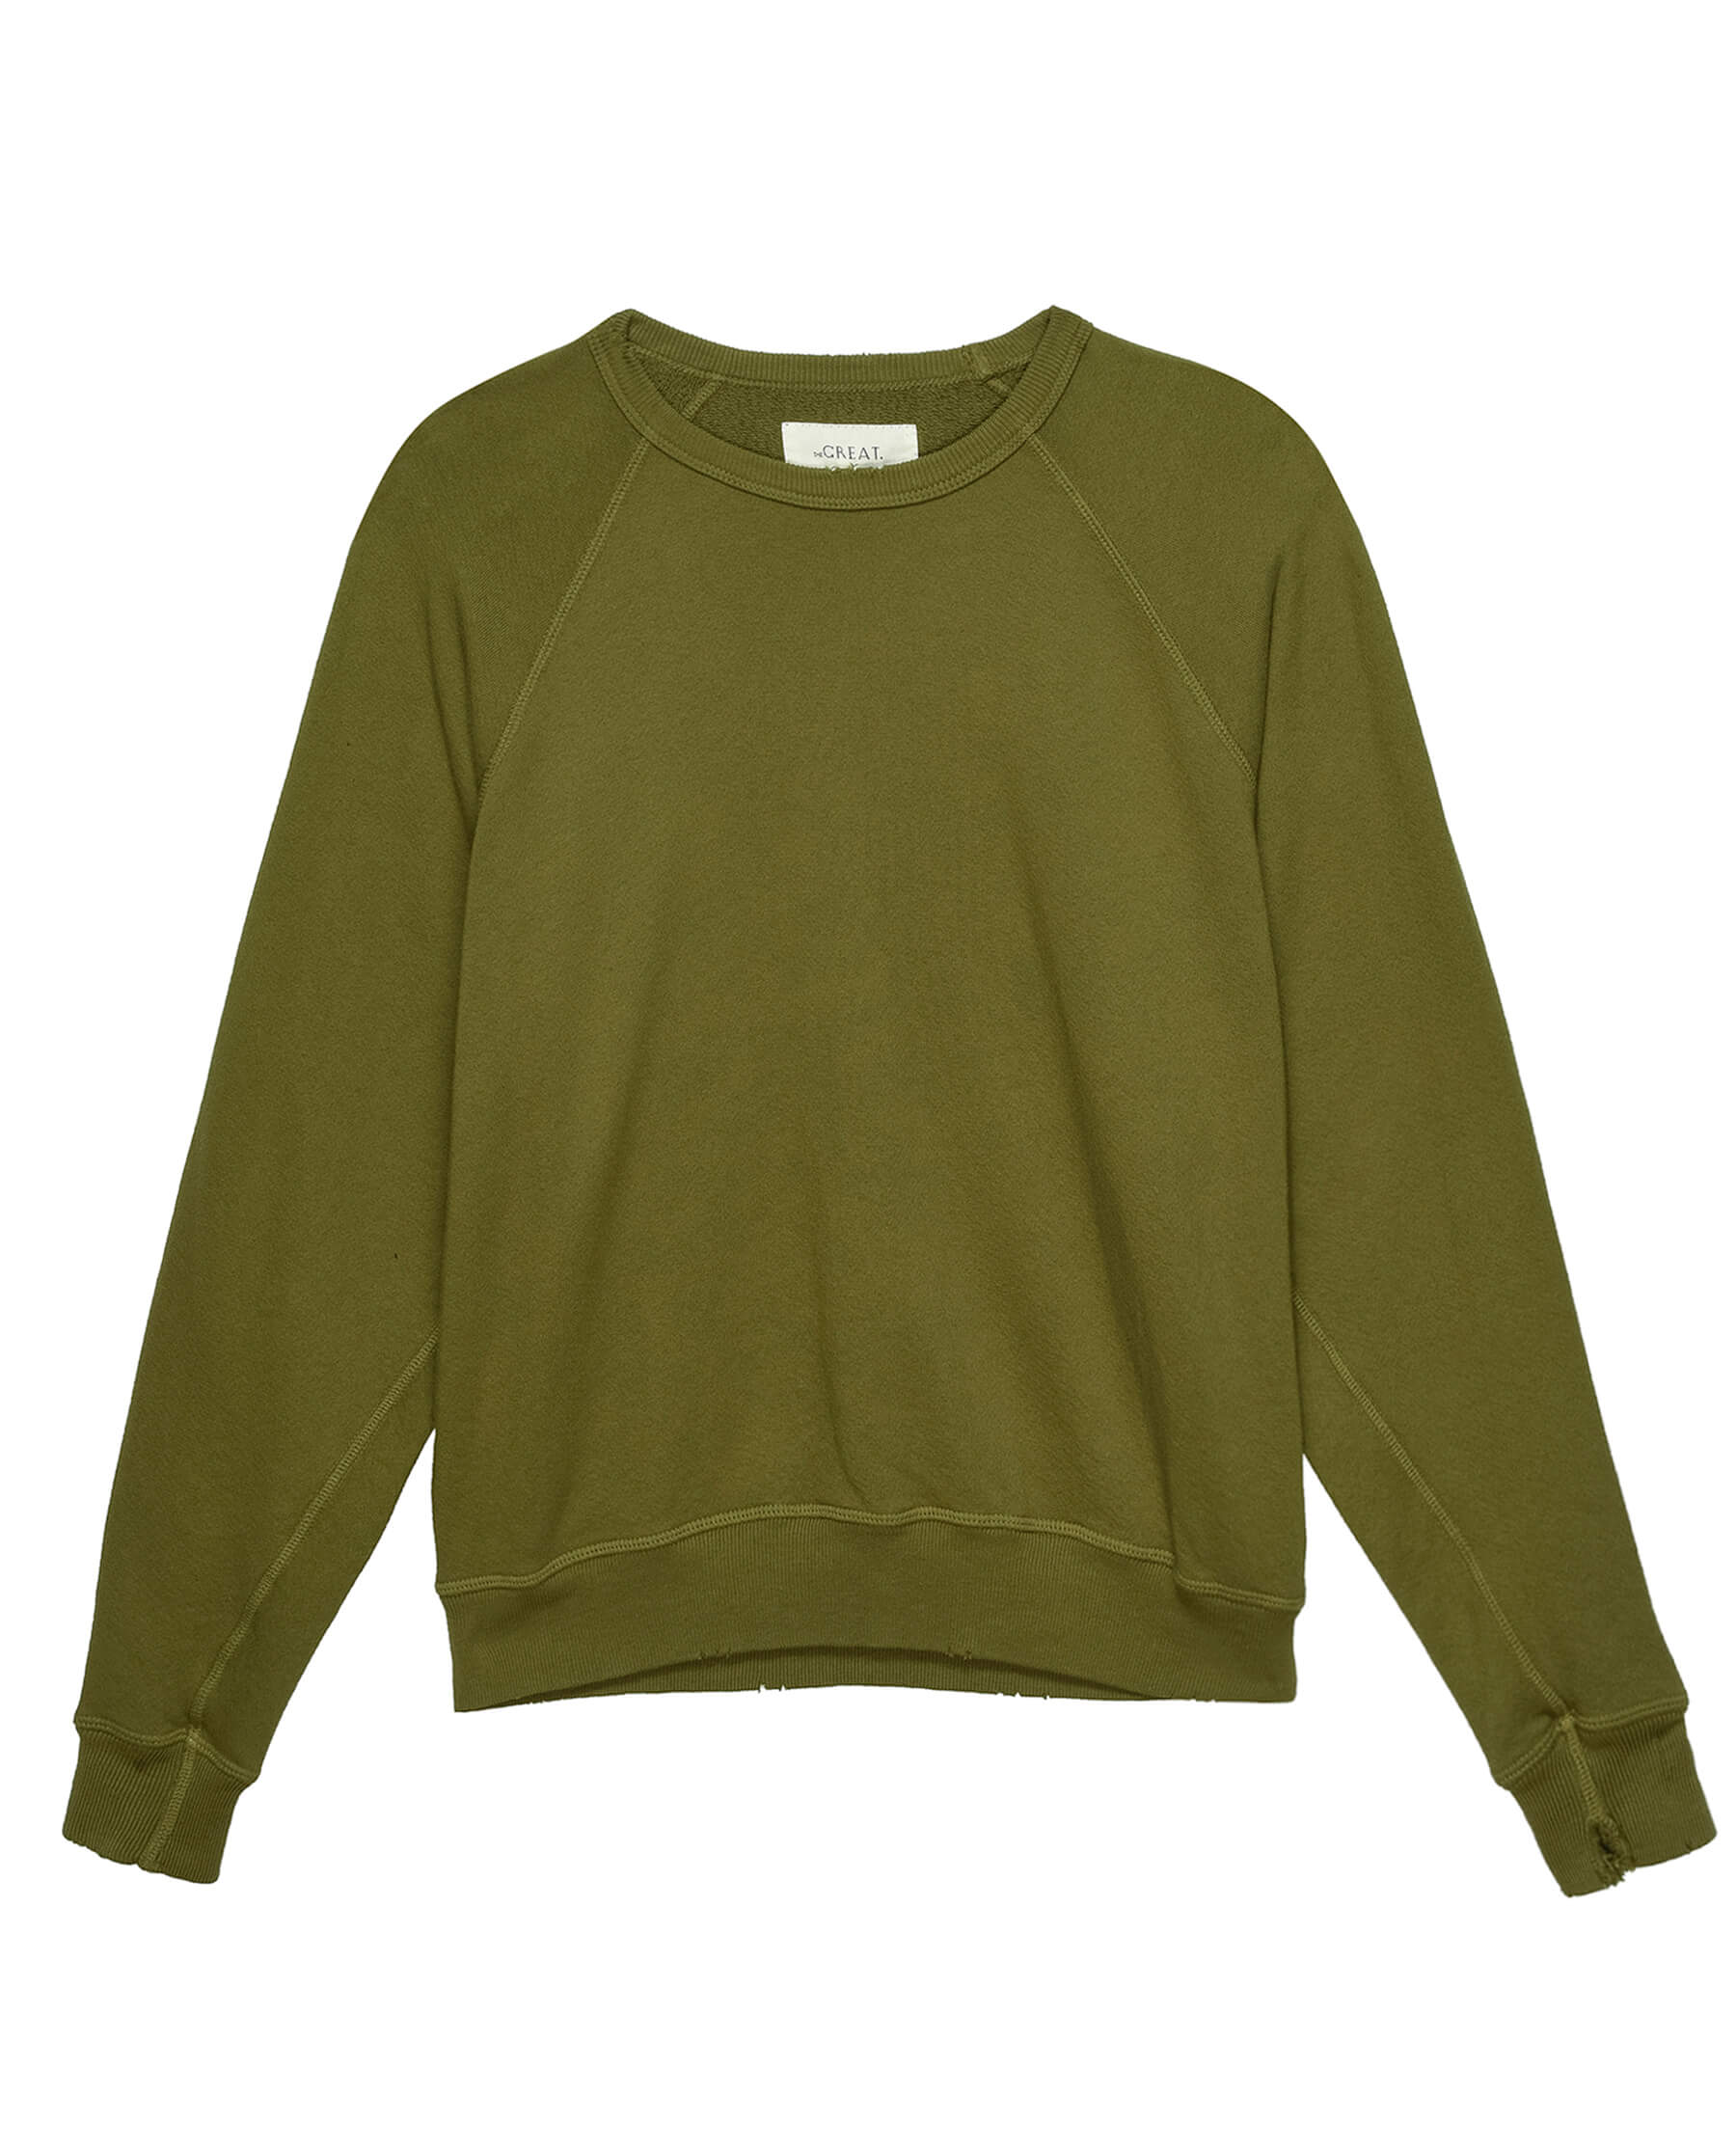 The College Sweatshirt. Solid -- Fir Green SWEATSHIRTS THE GREAT. FALL 23 KNITS